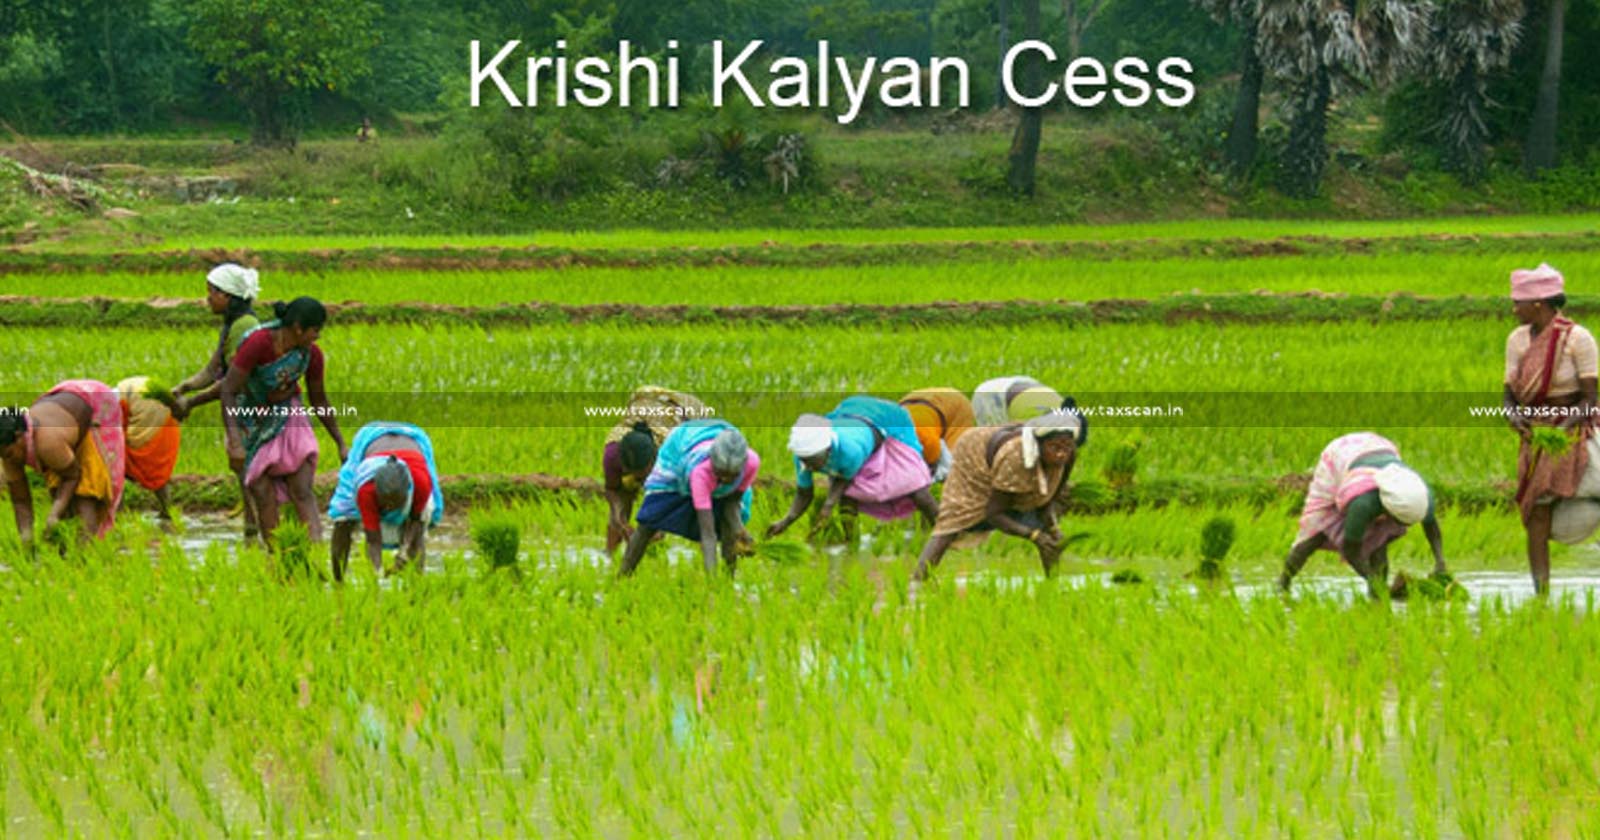 Export Service - Grade Pig Iron - Refund - Krishi Kalyan Cess - Service Tax - Finance Act - CESTAT - taxscan